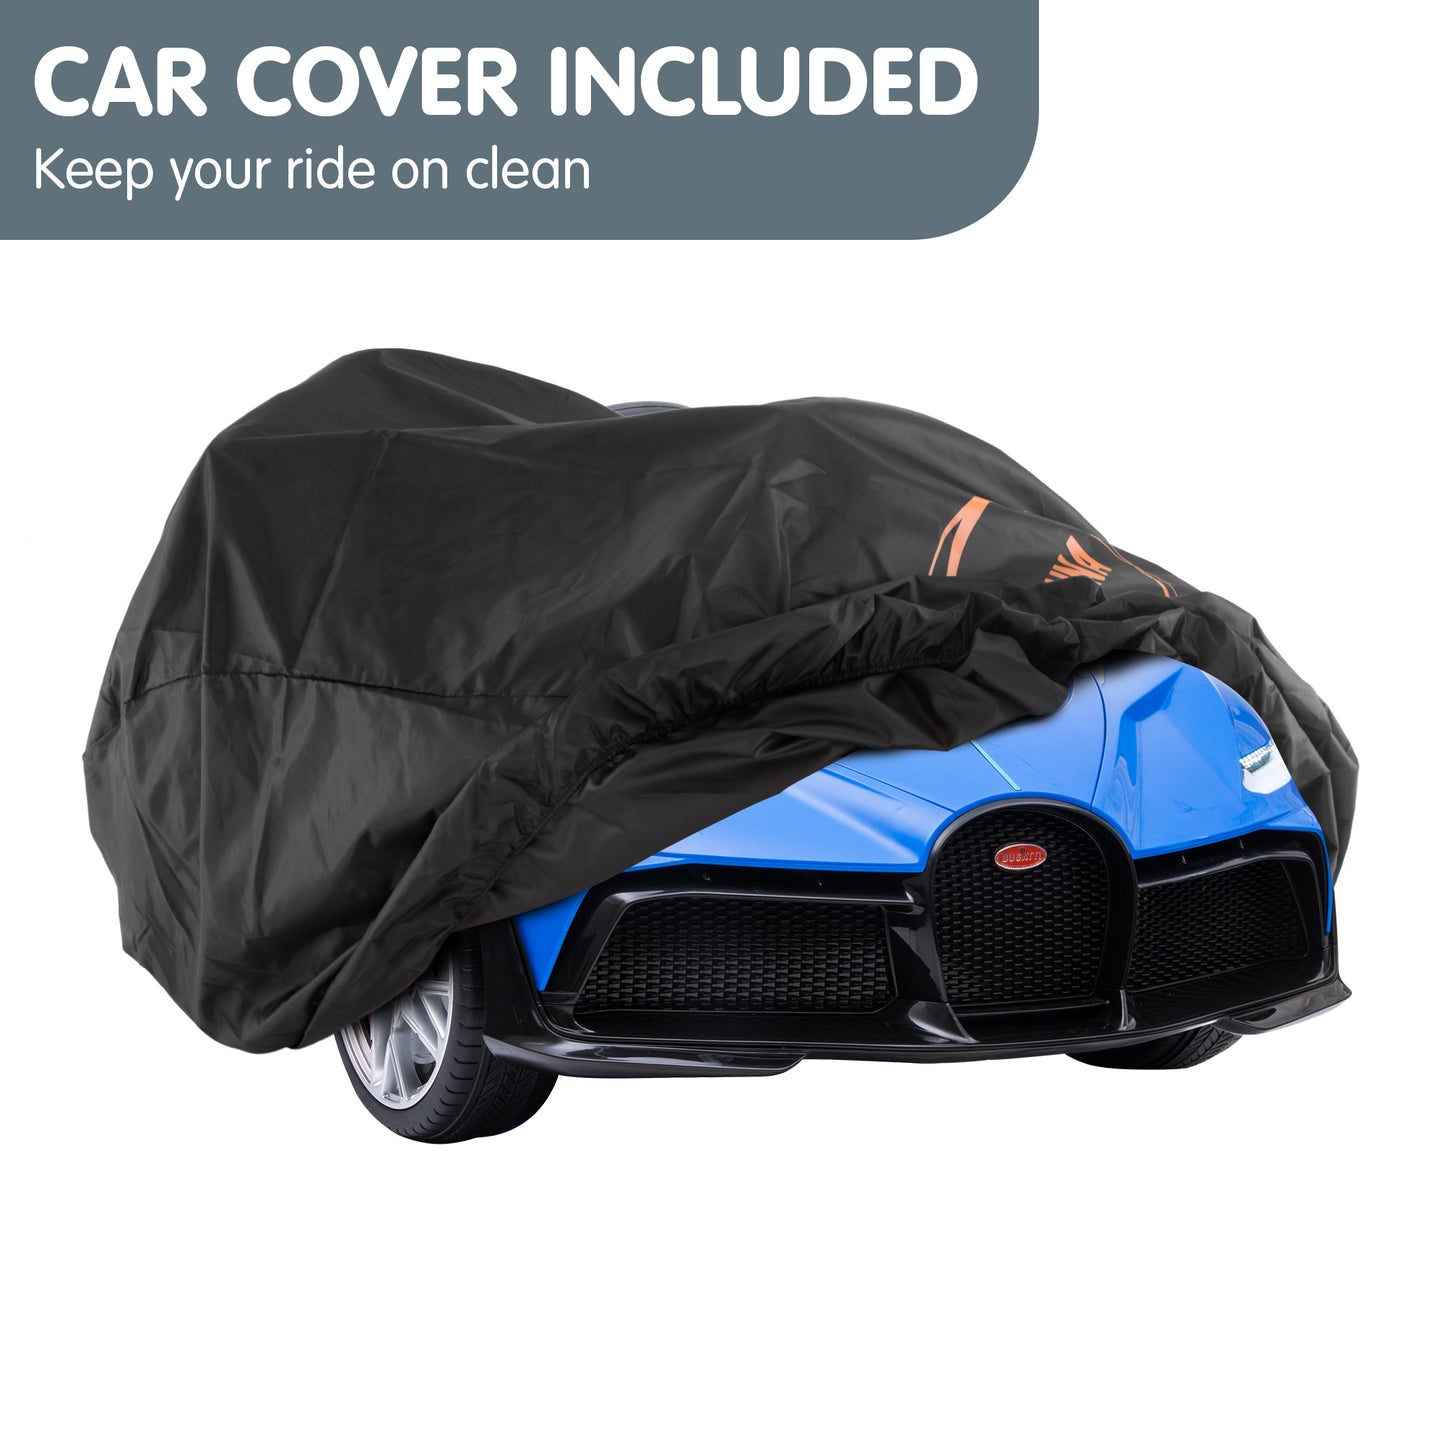 Licensed Bugatti Divo Kids Electric Ride On Car - Blue